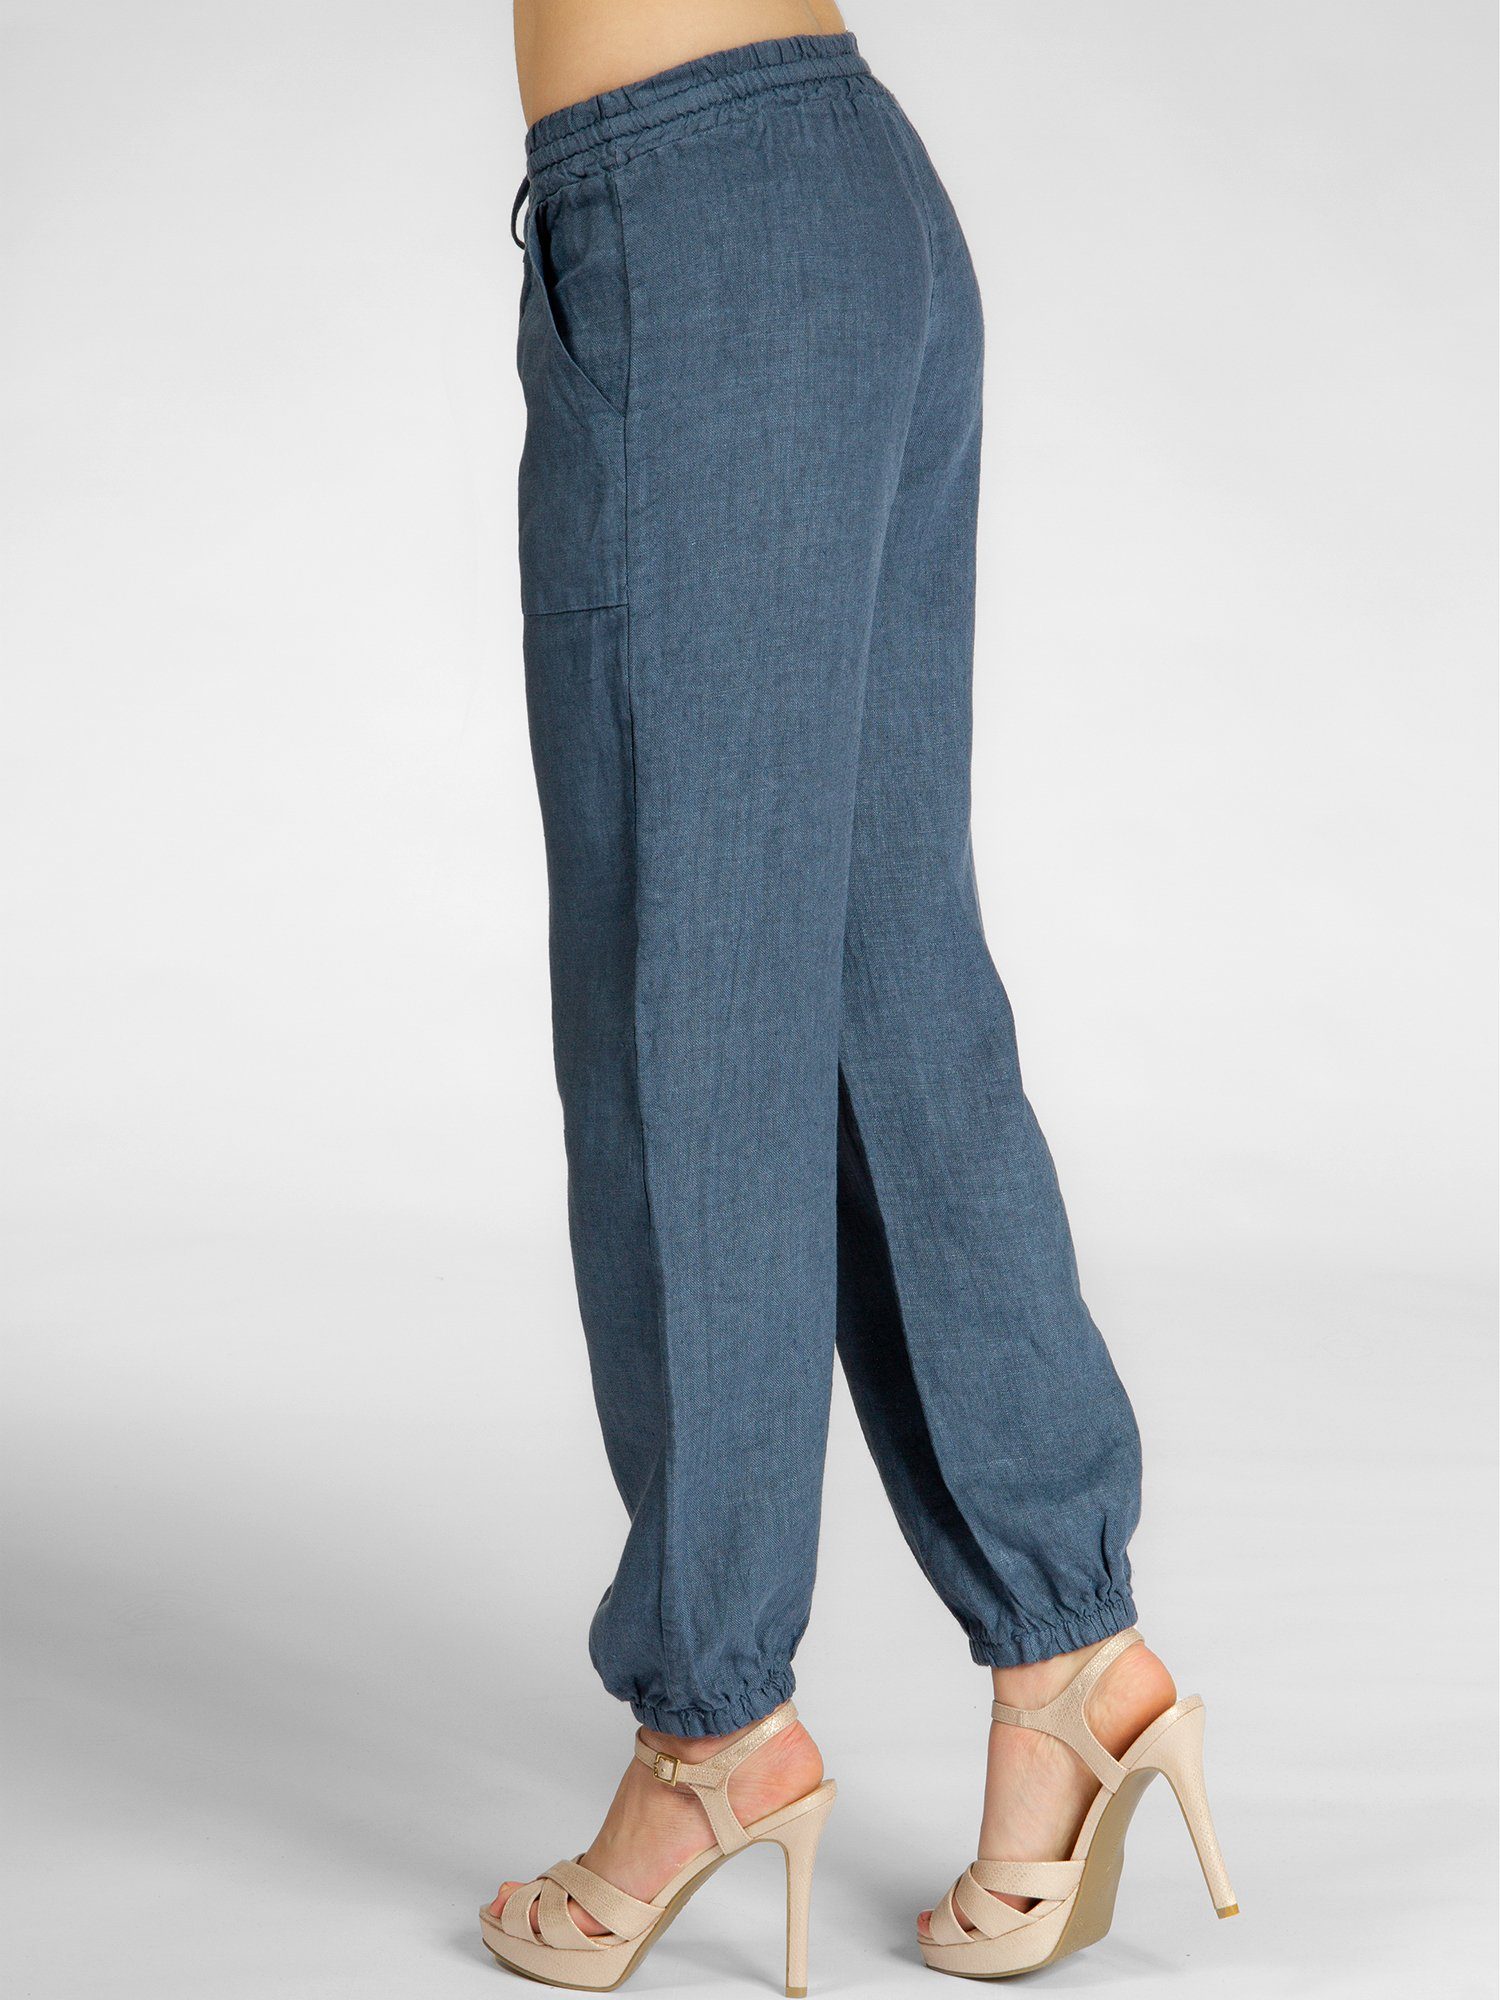 Caspar Damen blau jeans Sommer Leinenhose Leinenhose Casual KHS051 elegante